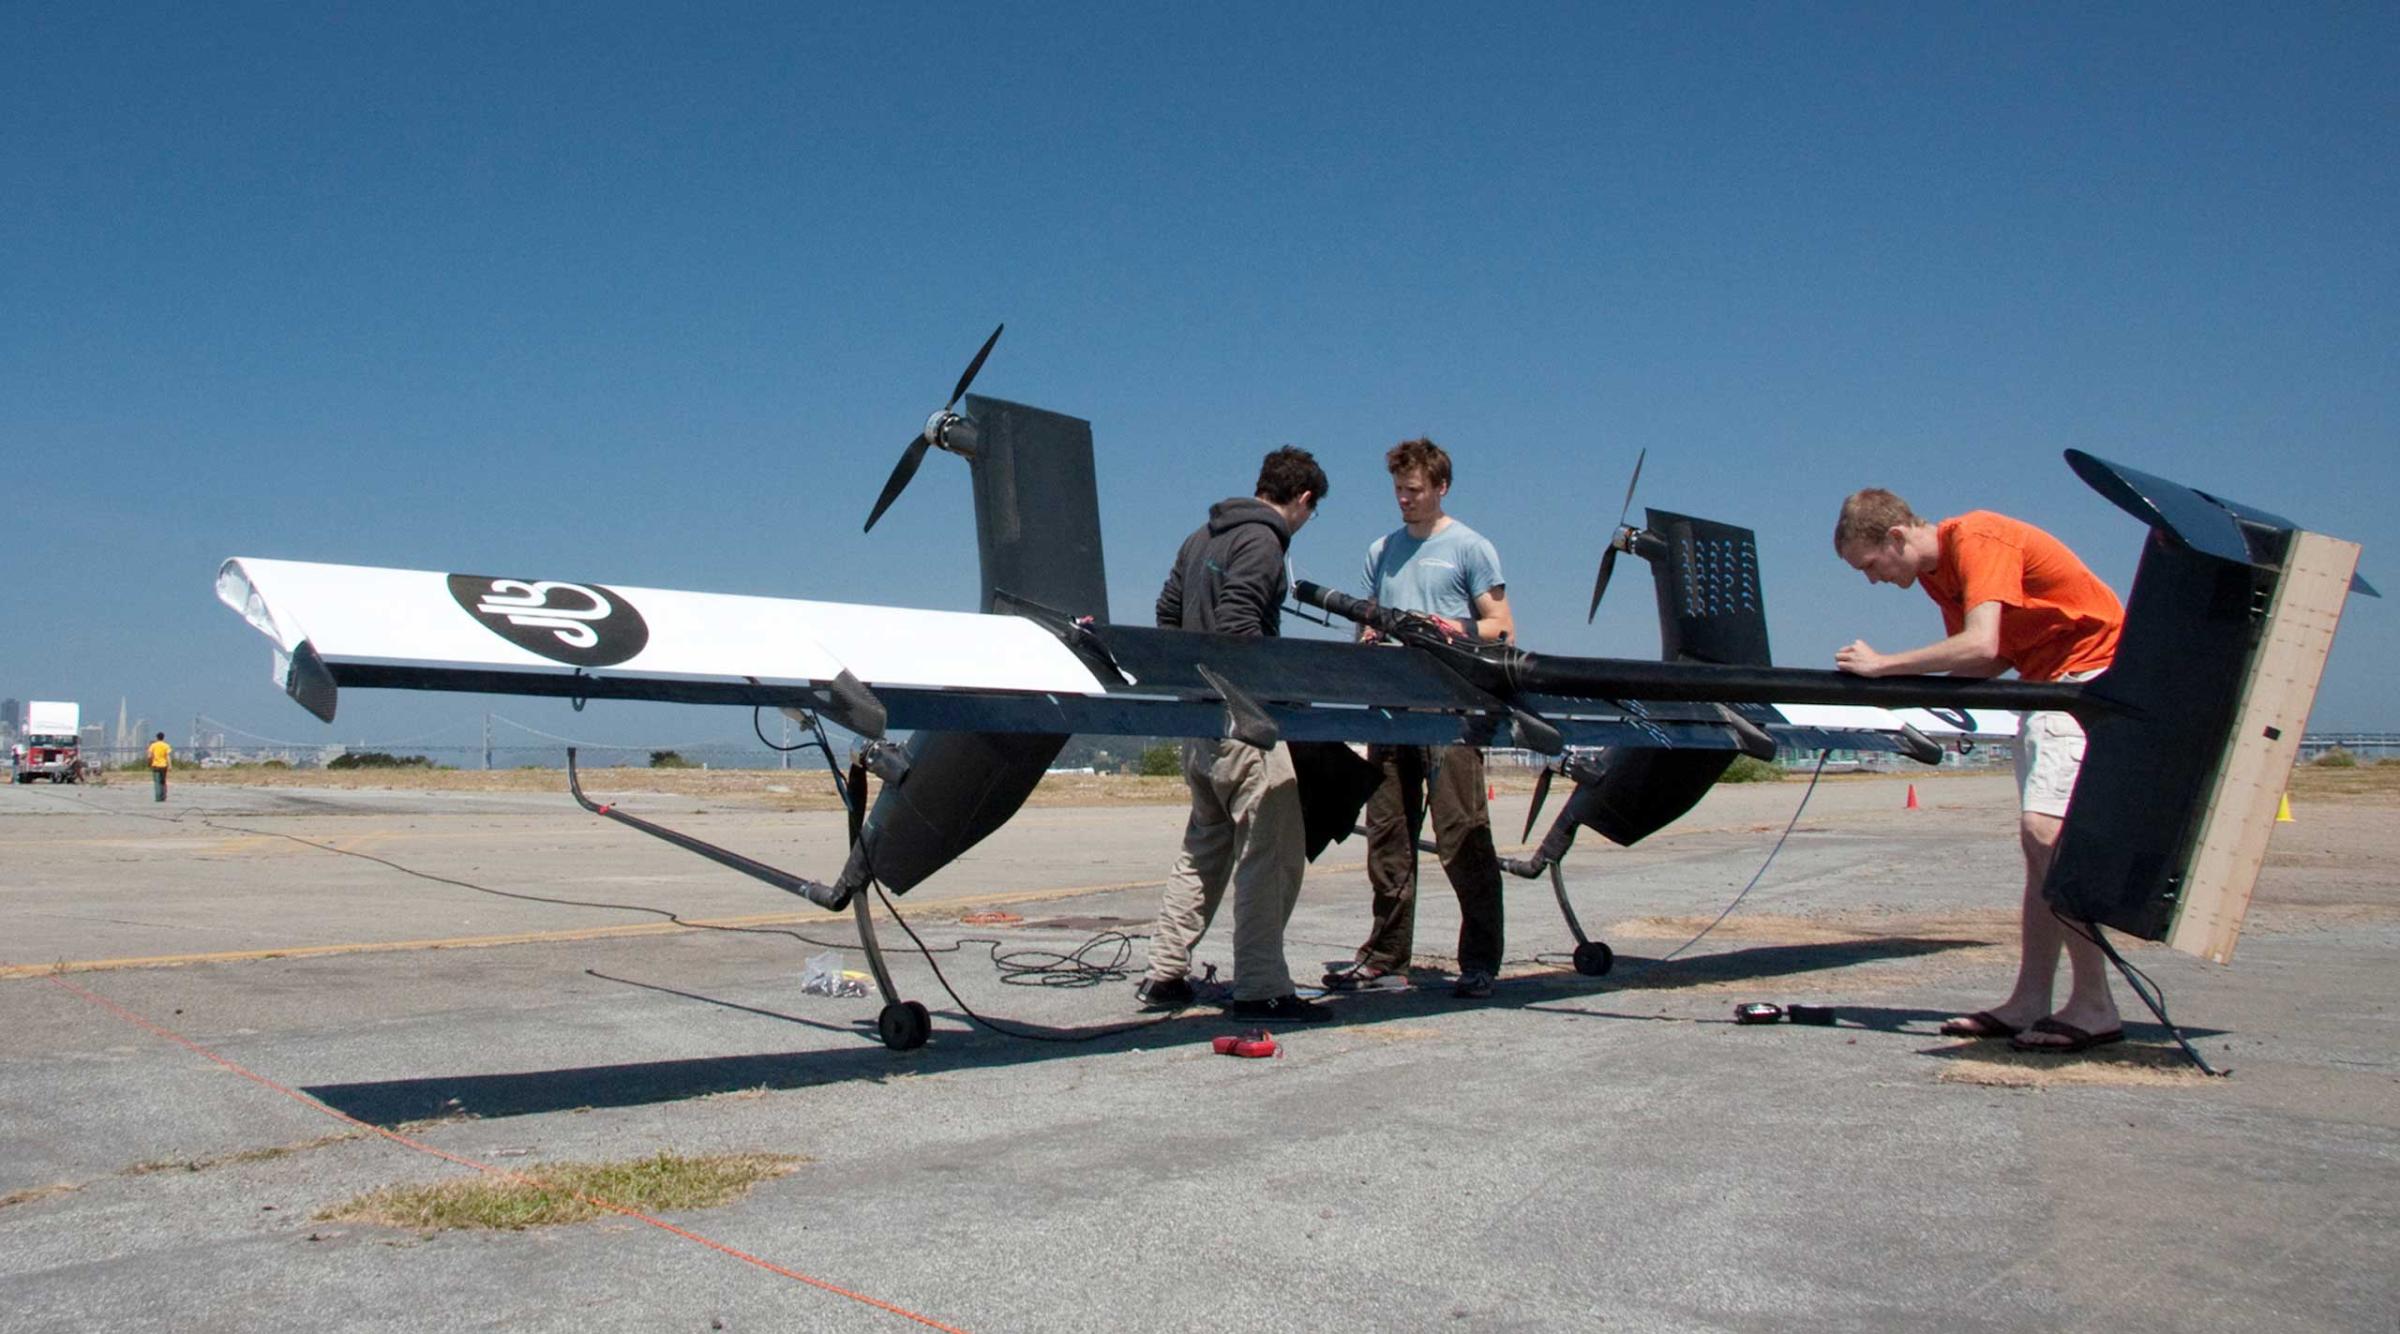 Flight team engineers Kenneth Jensen, left, Damon Vander Lind, center, and Matthew Peddie prepare for the first crosswind test of their 20kW Wing 7 airborne wind turbine prototype in Alameda, Calif. on May 24, 2011